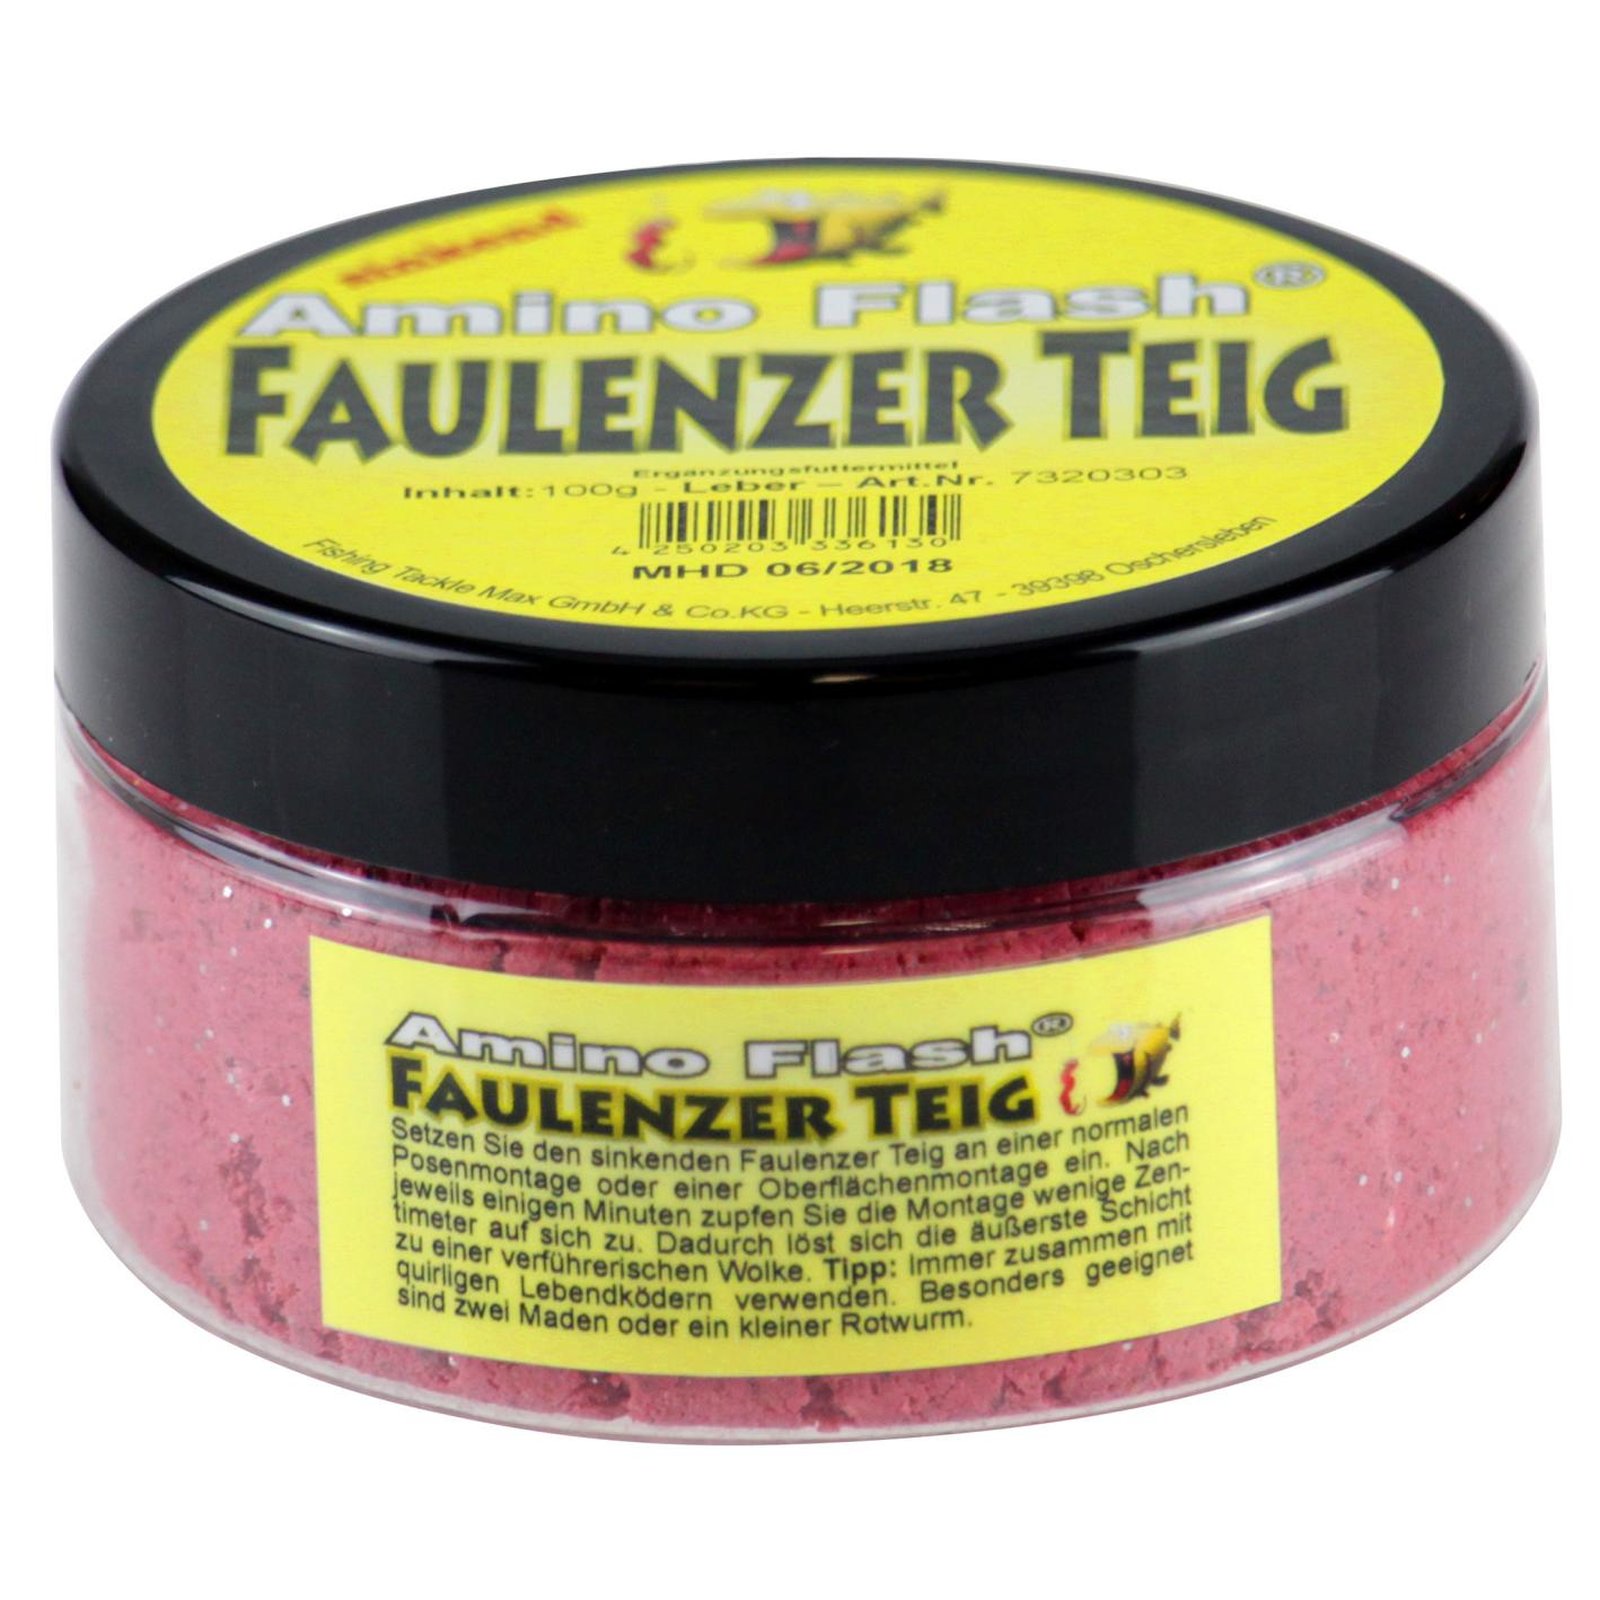 FTM Amino Flash Faulenzer Teig - Leber rosa 100g